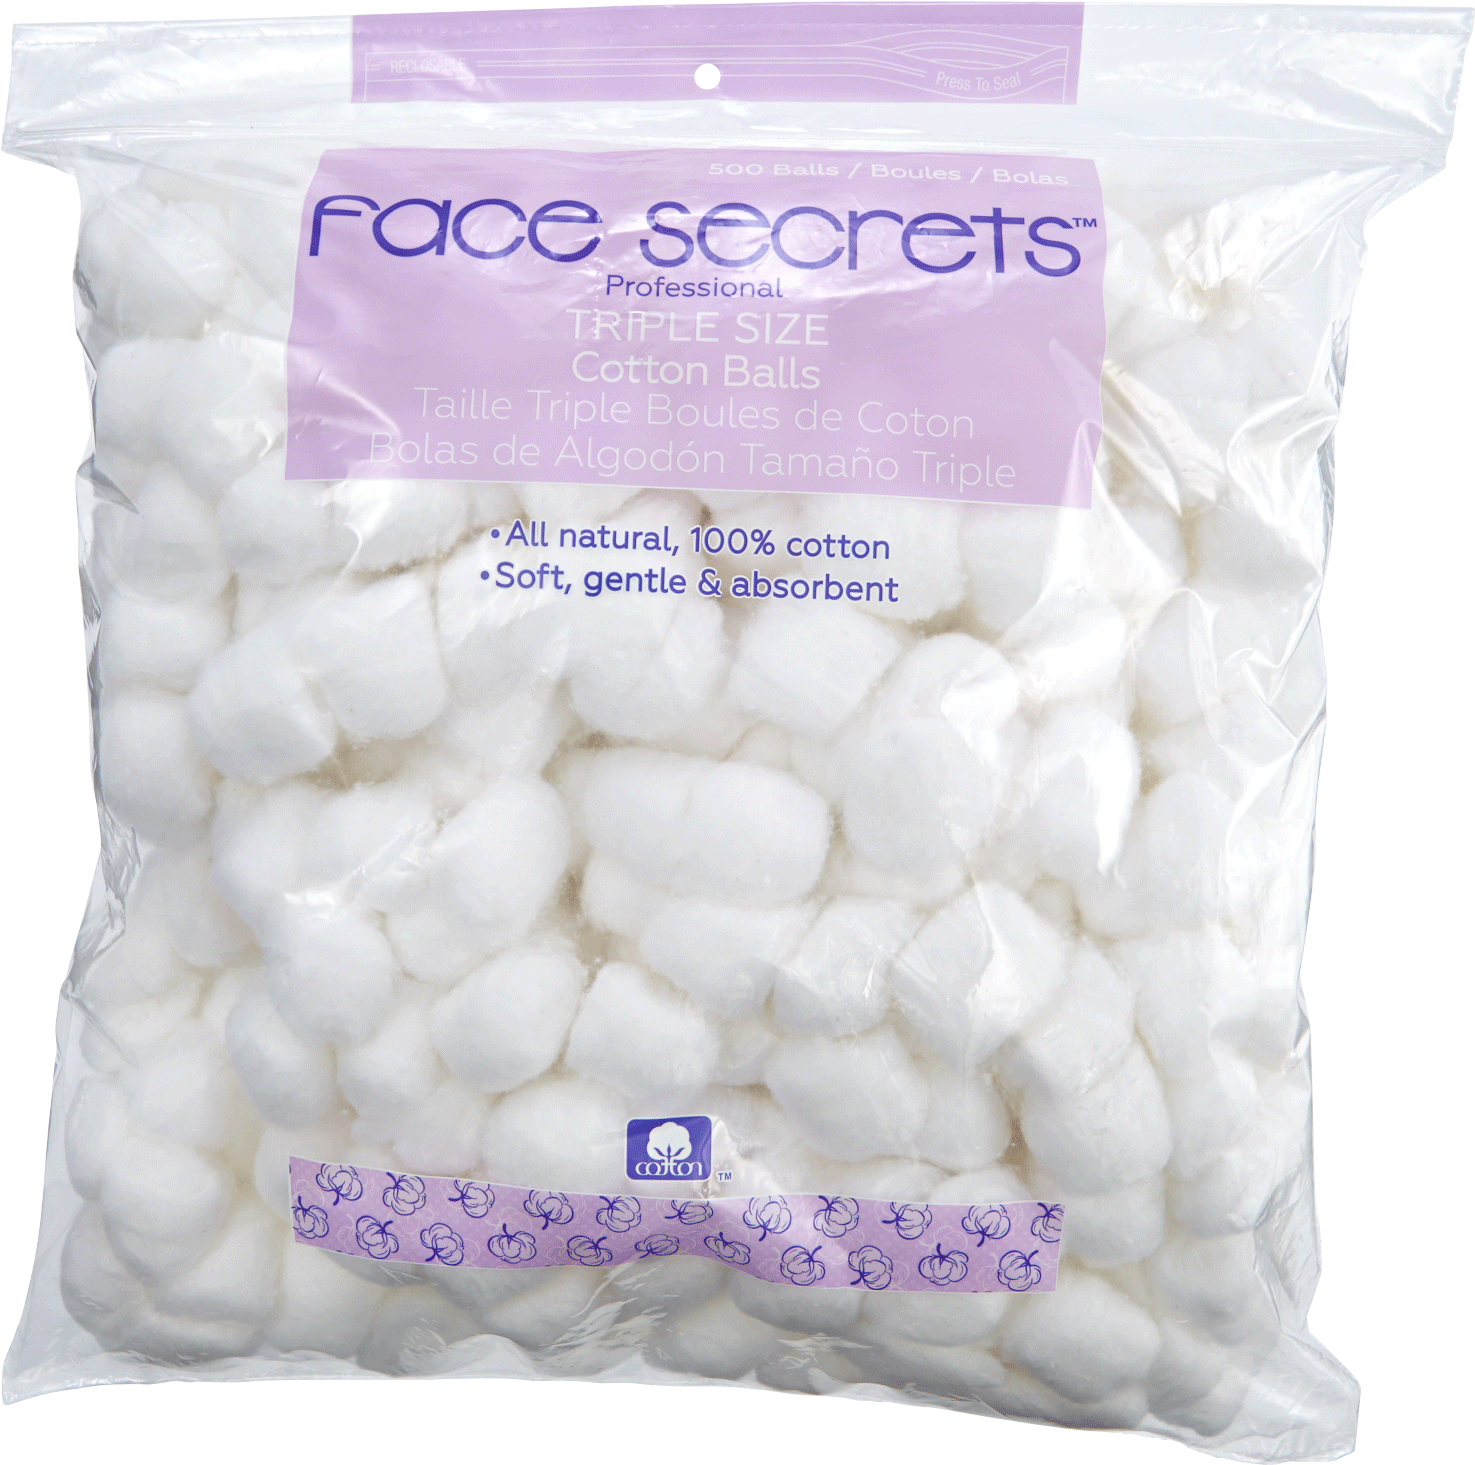 Face Secrets Professional Triple Size Cotton Balls Packaging PNG image